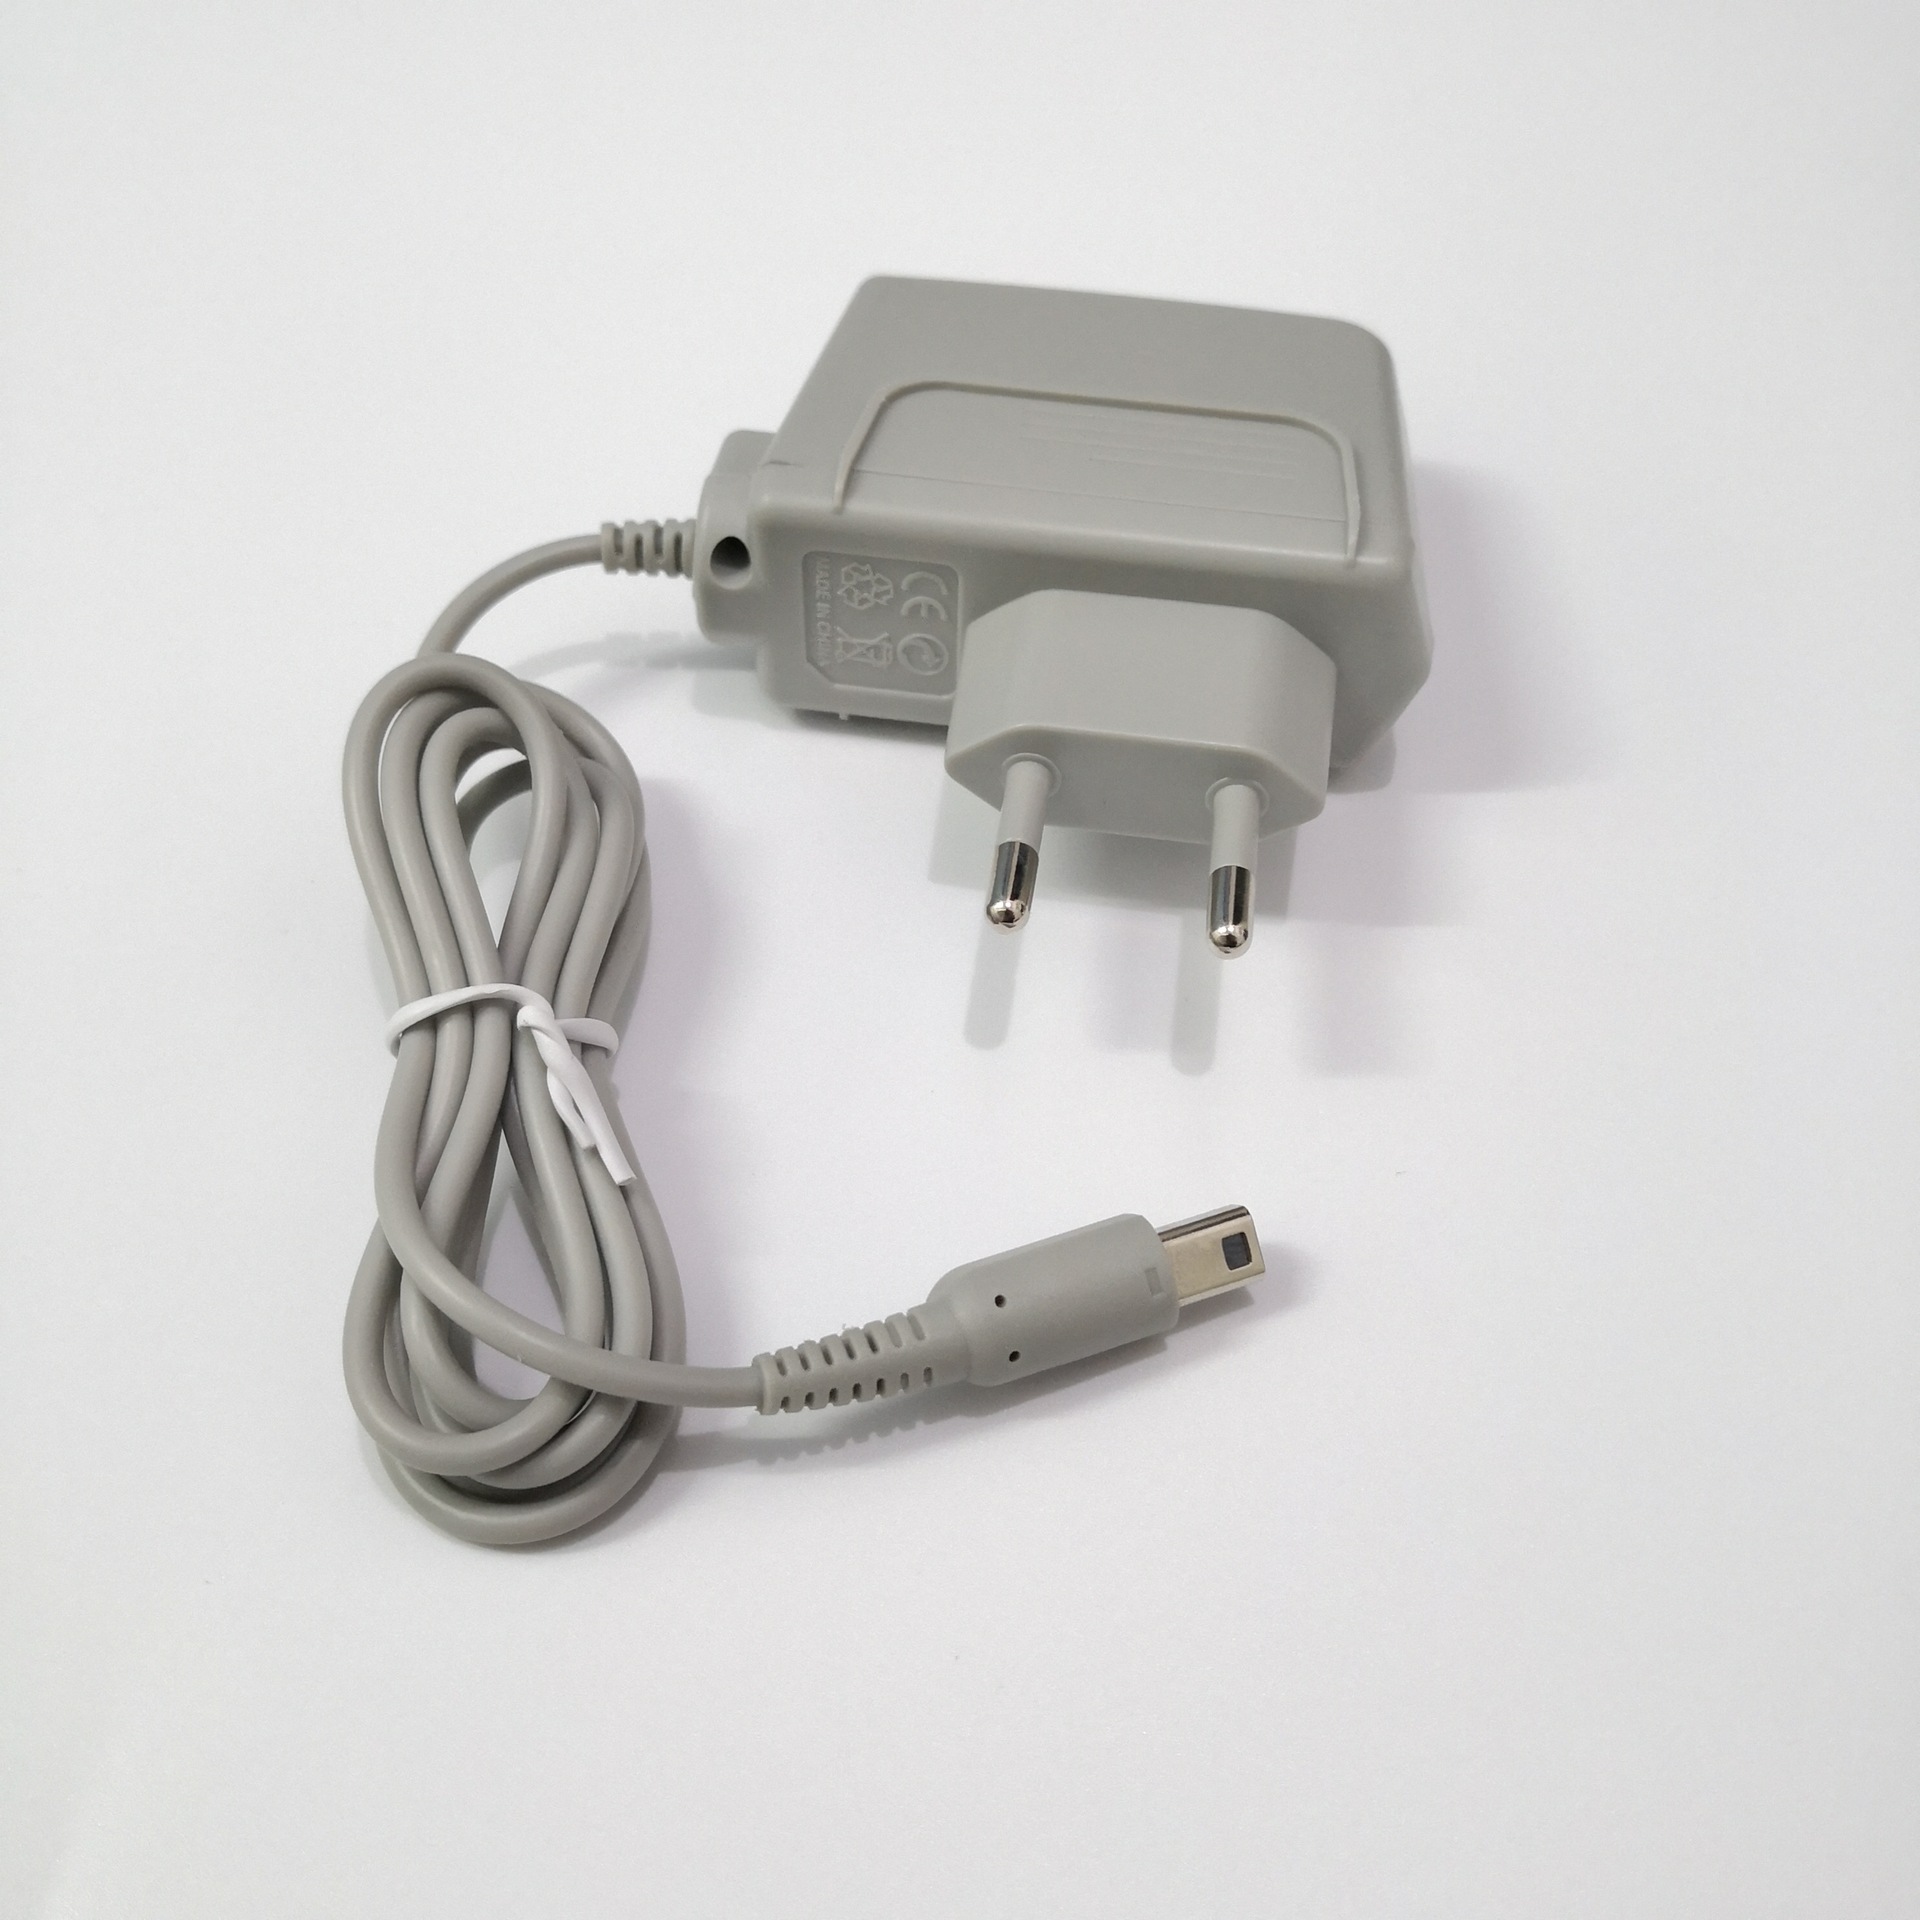 AC Power Charger Adapter Home Wall Travel Batterij Lader Lader Levering Kabel Cord EU US Plug voor Nintendo NDSI 3DS 3DSXL LL DSI